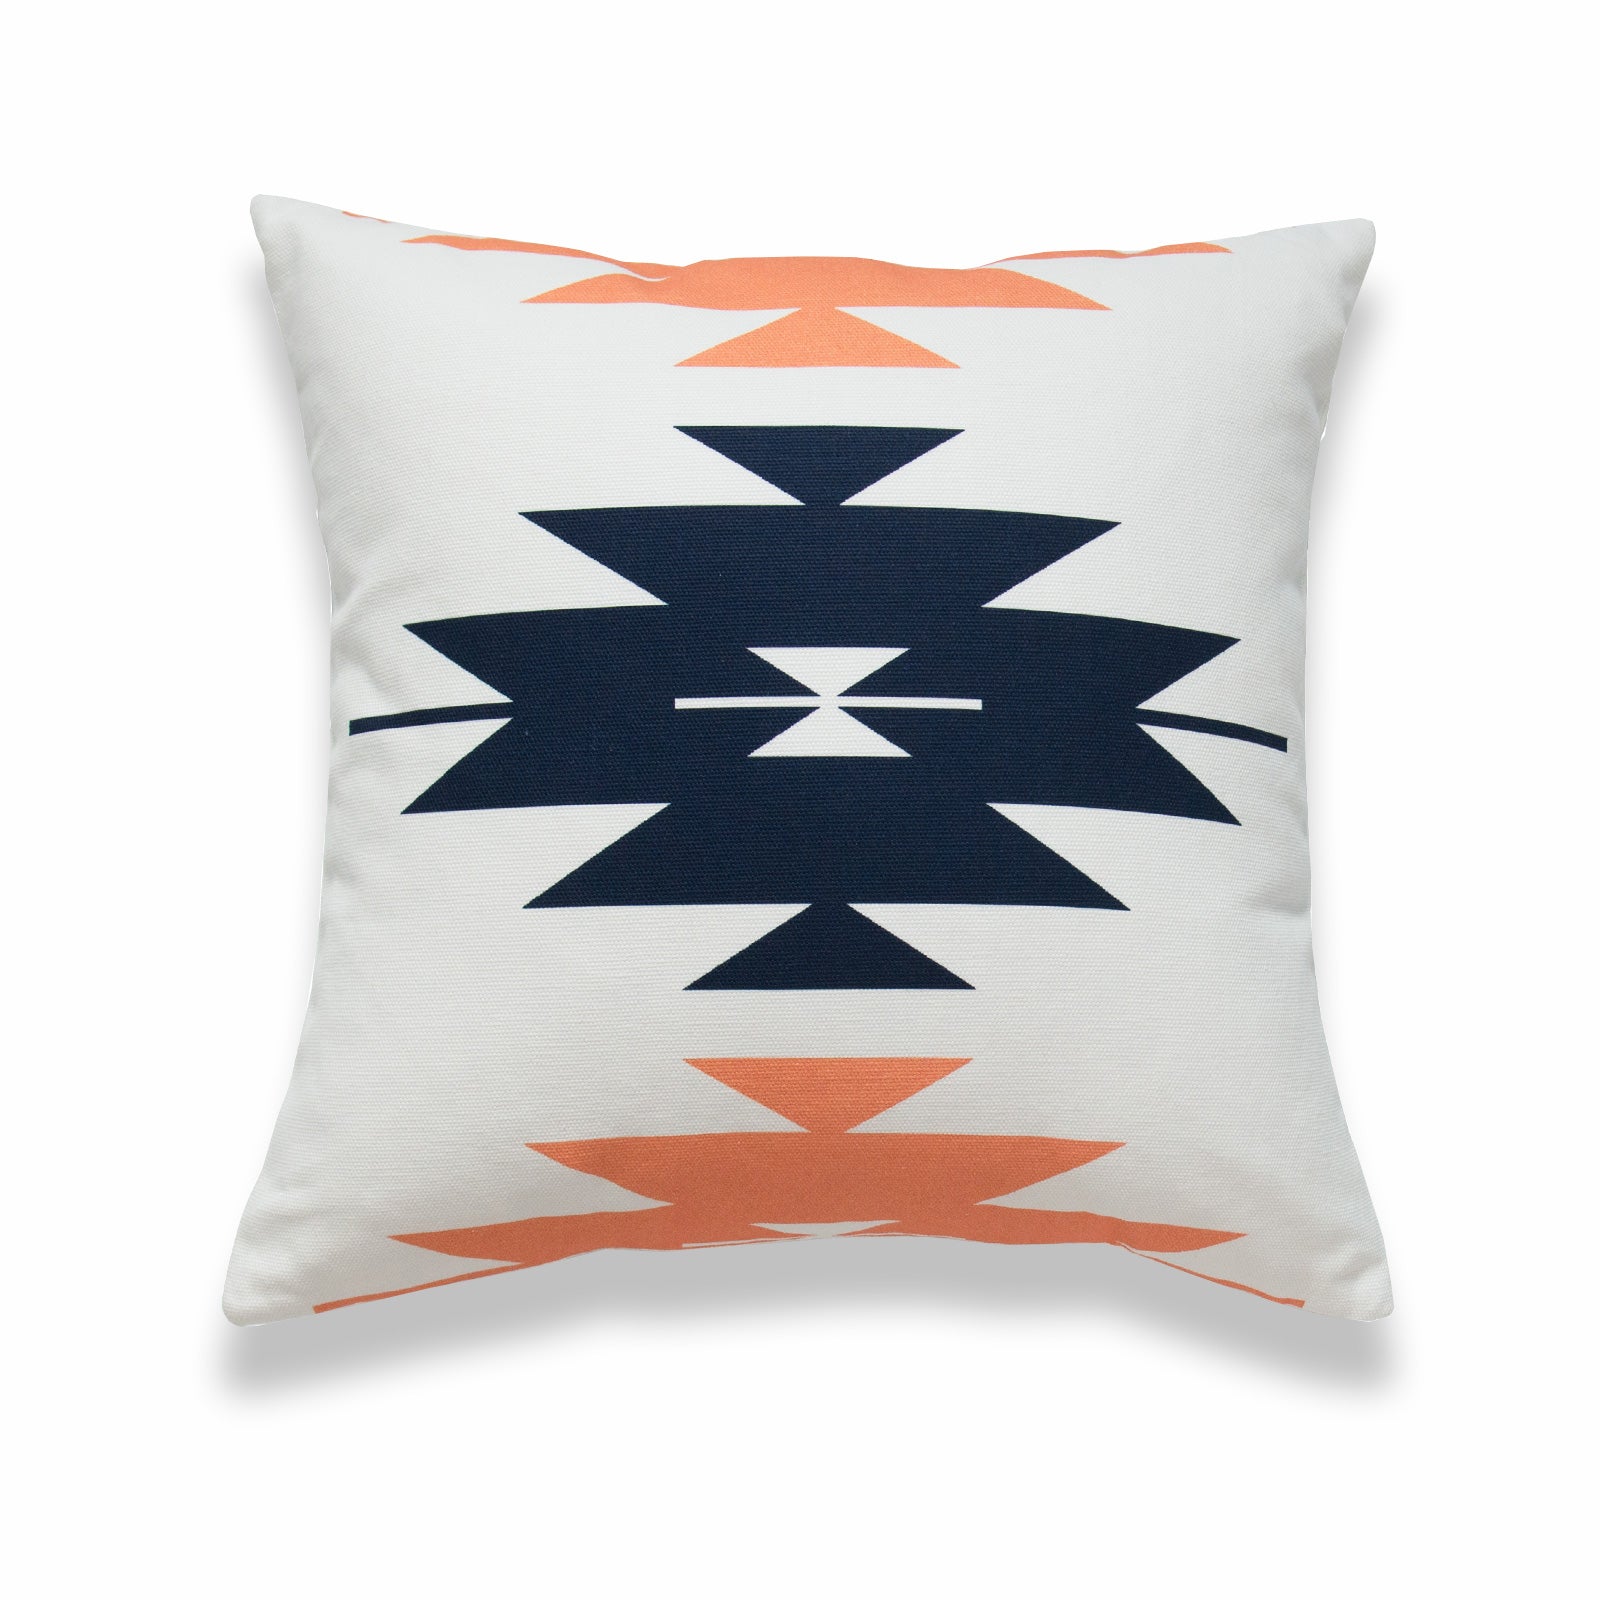 Aztec Print Pillow Cover, Diamond, Navy Blue Coral Orange, 18"x18"